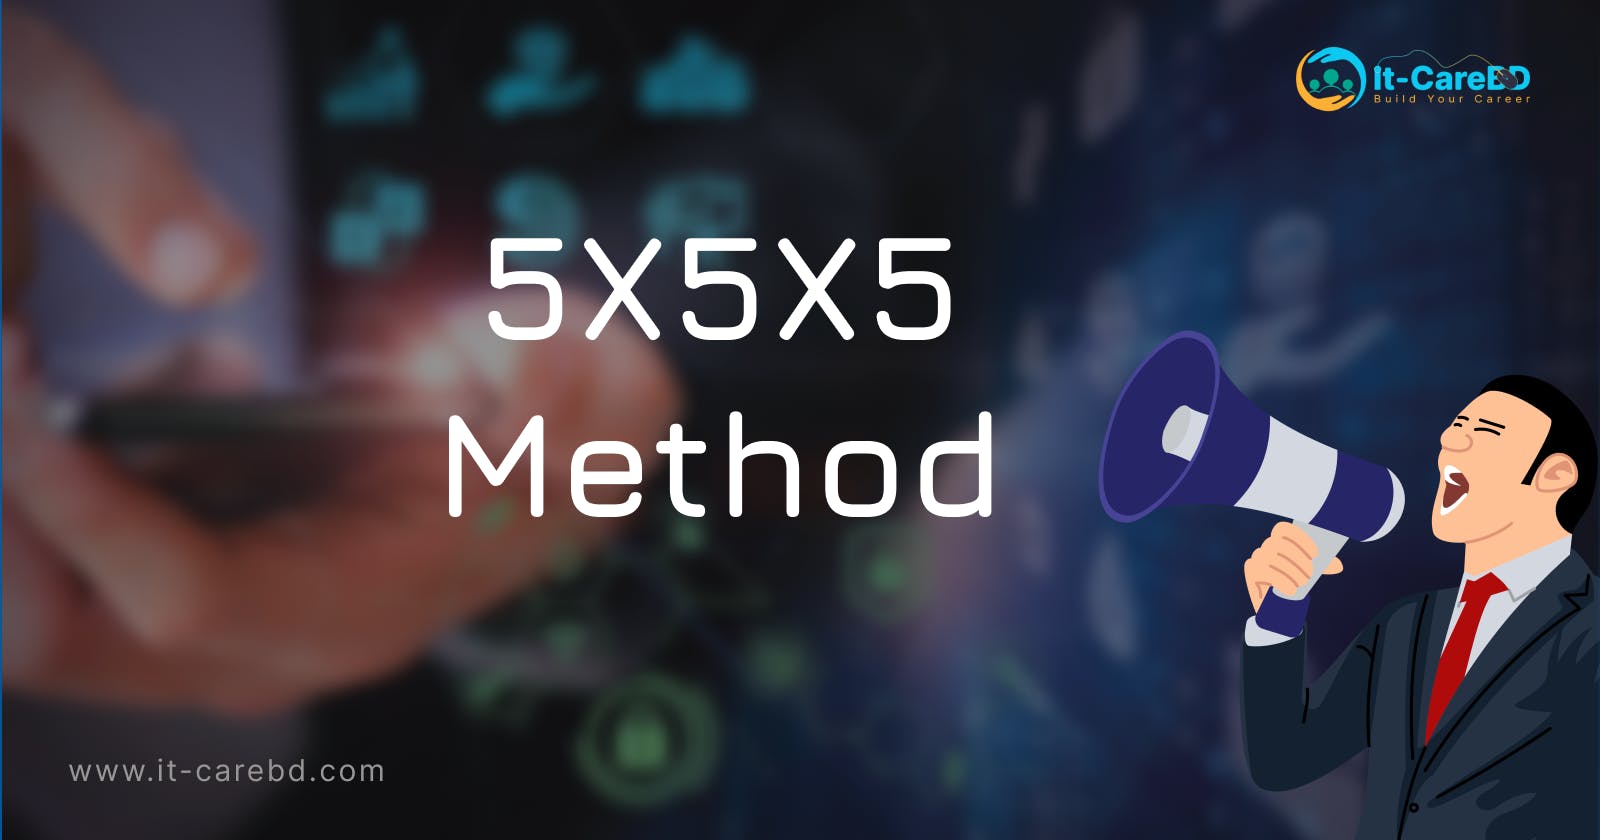 What is 5x5x5 Methods?